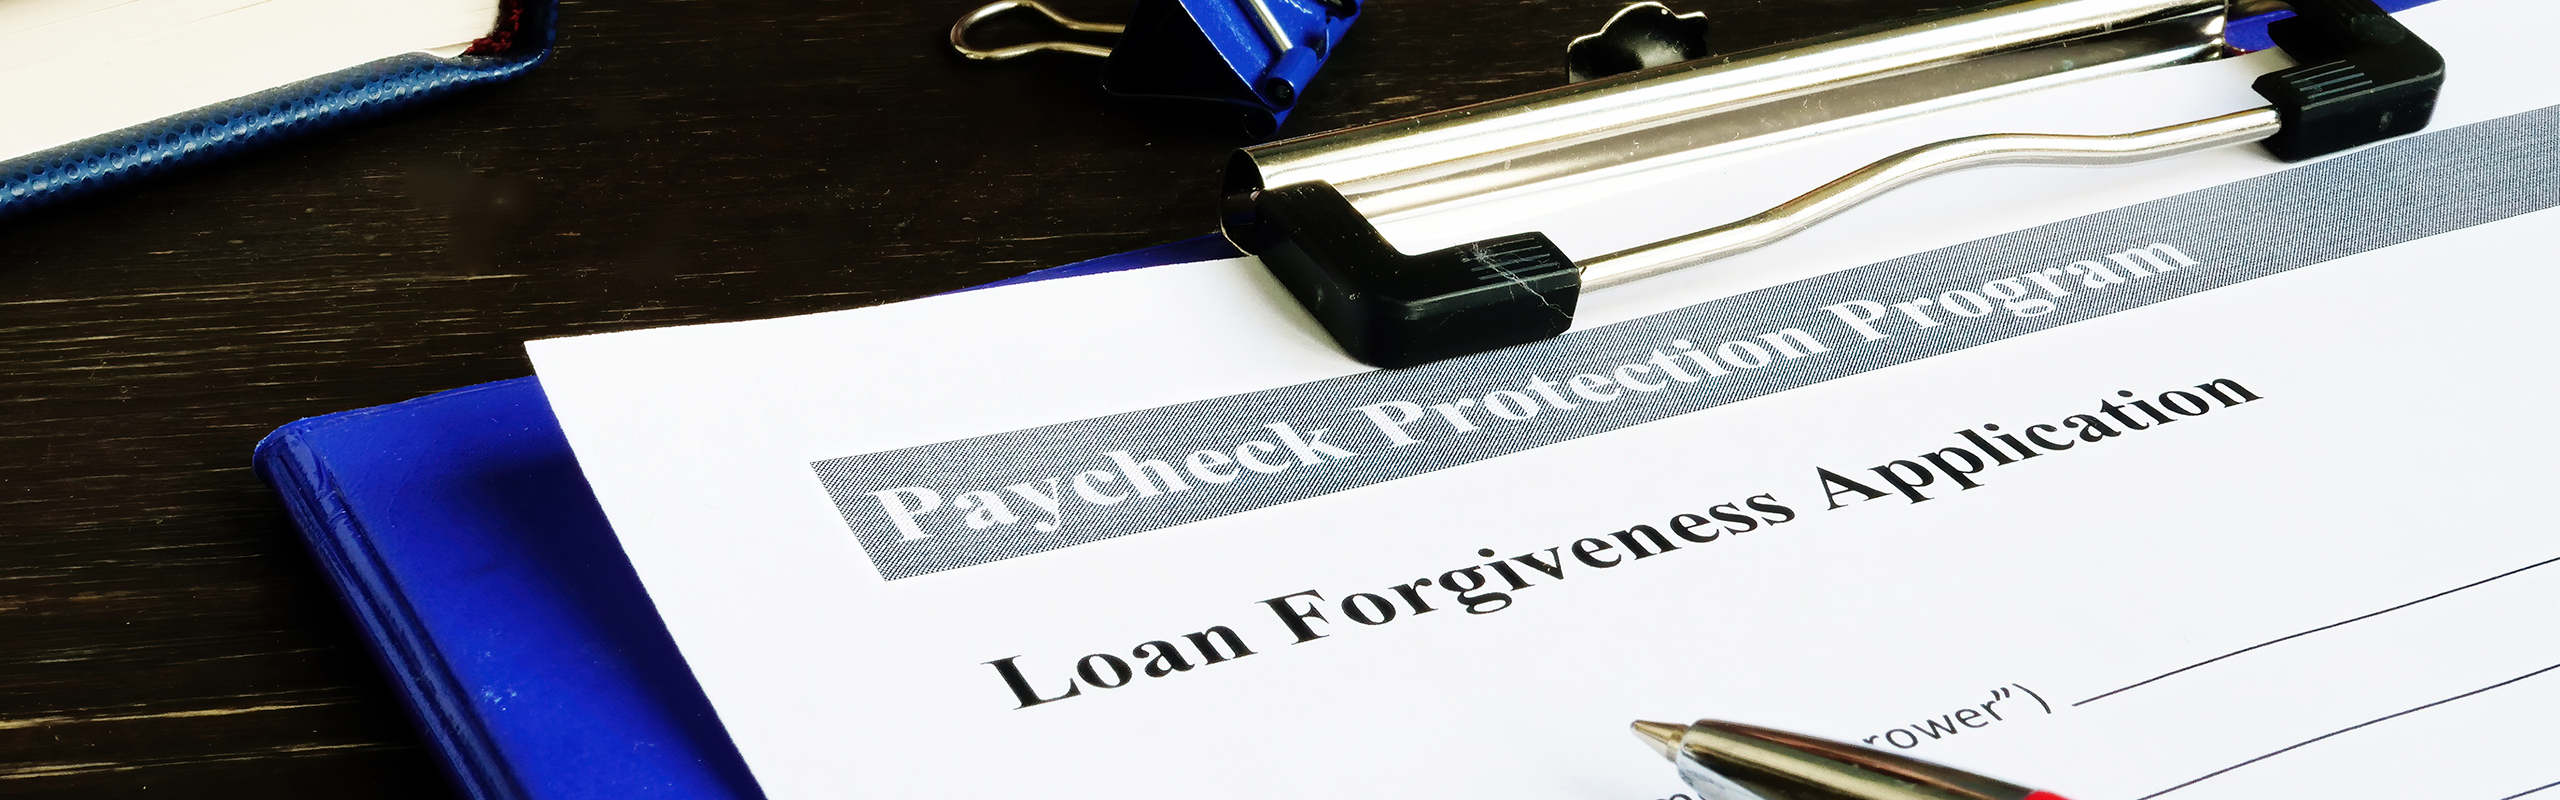 PPP loan forgiveness update